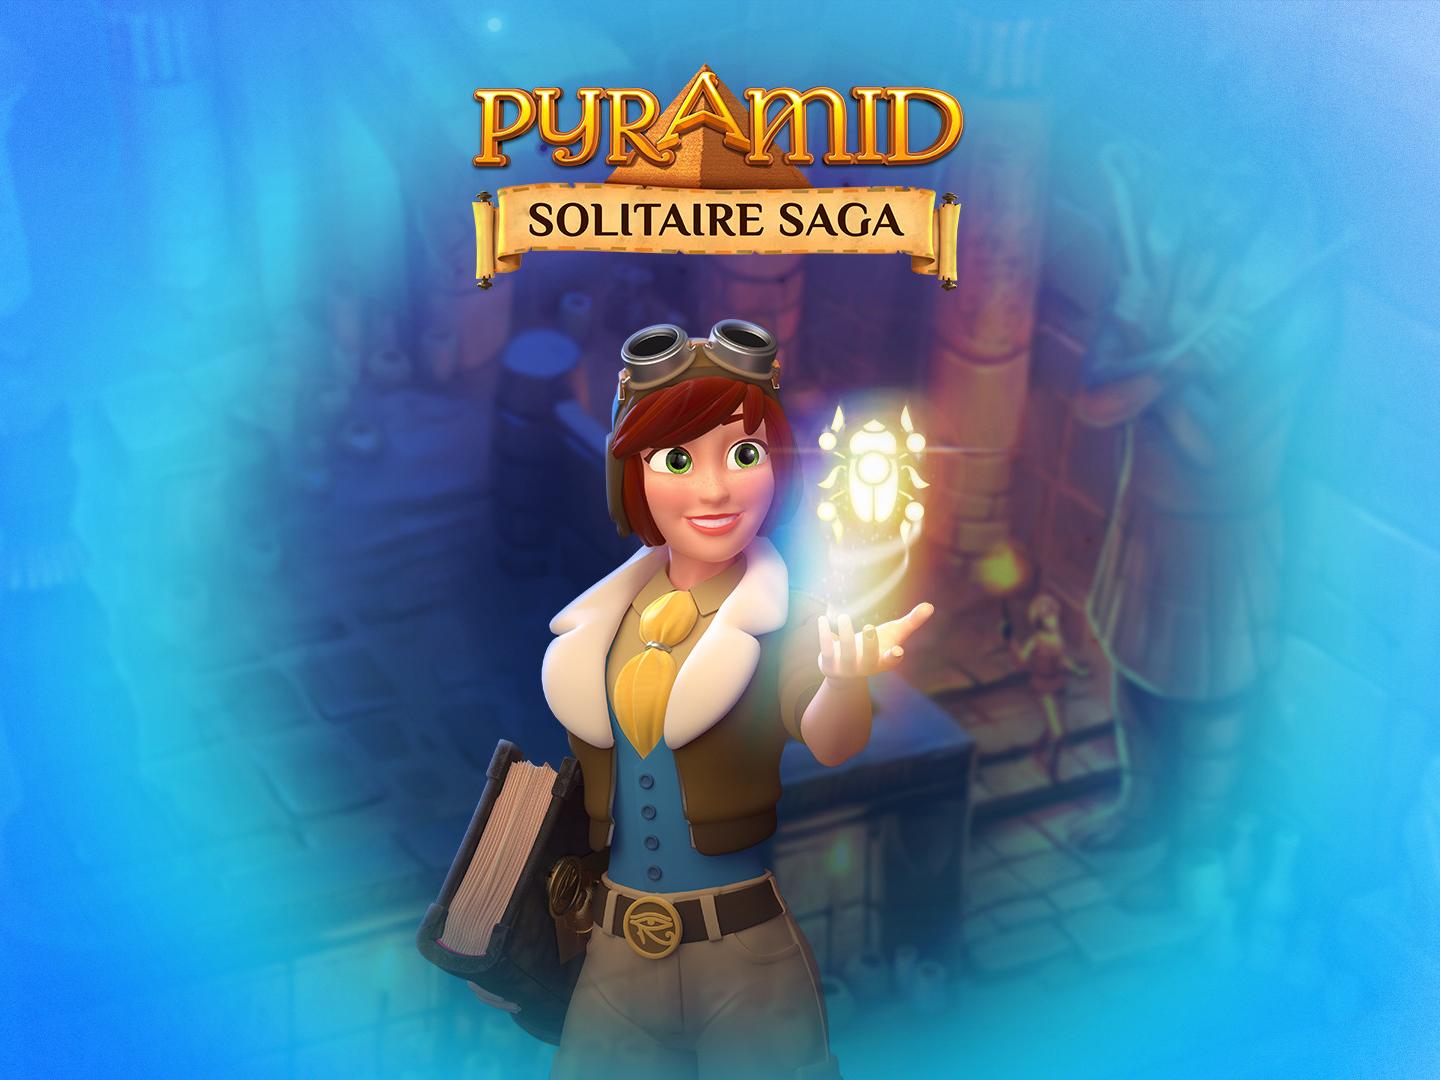 UI for King's "Pyramid Solitaire Saga" mobile game